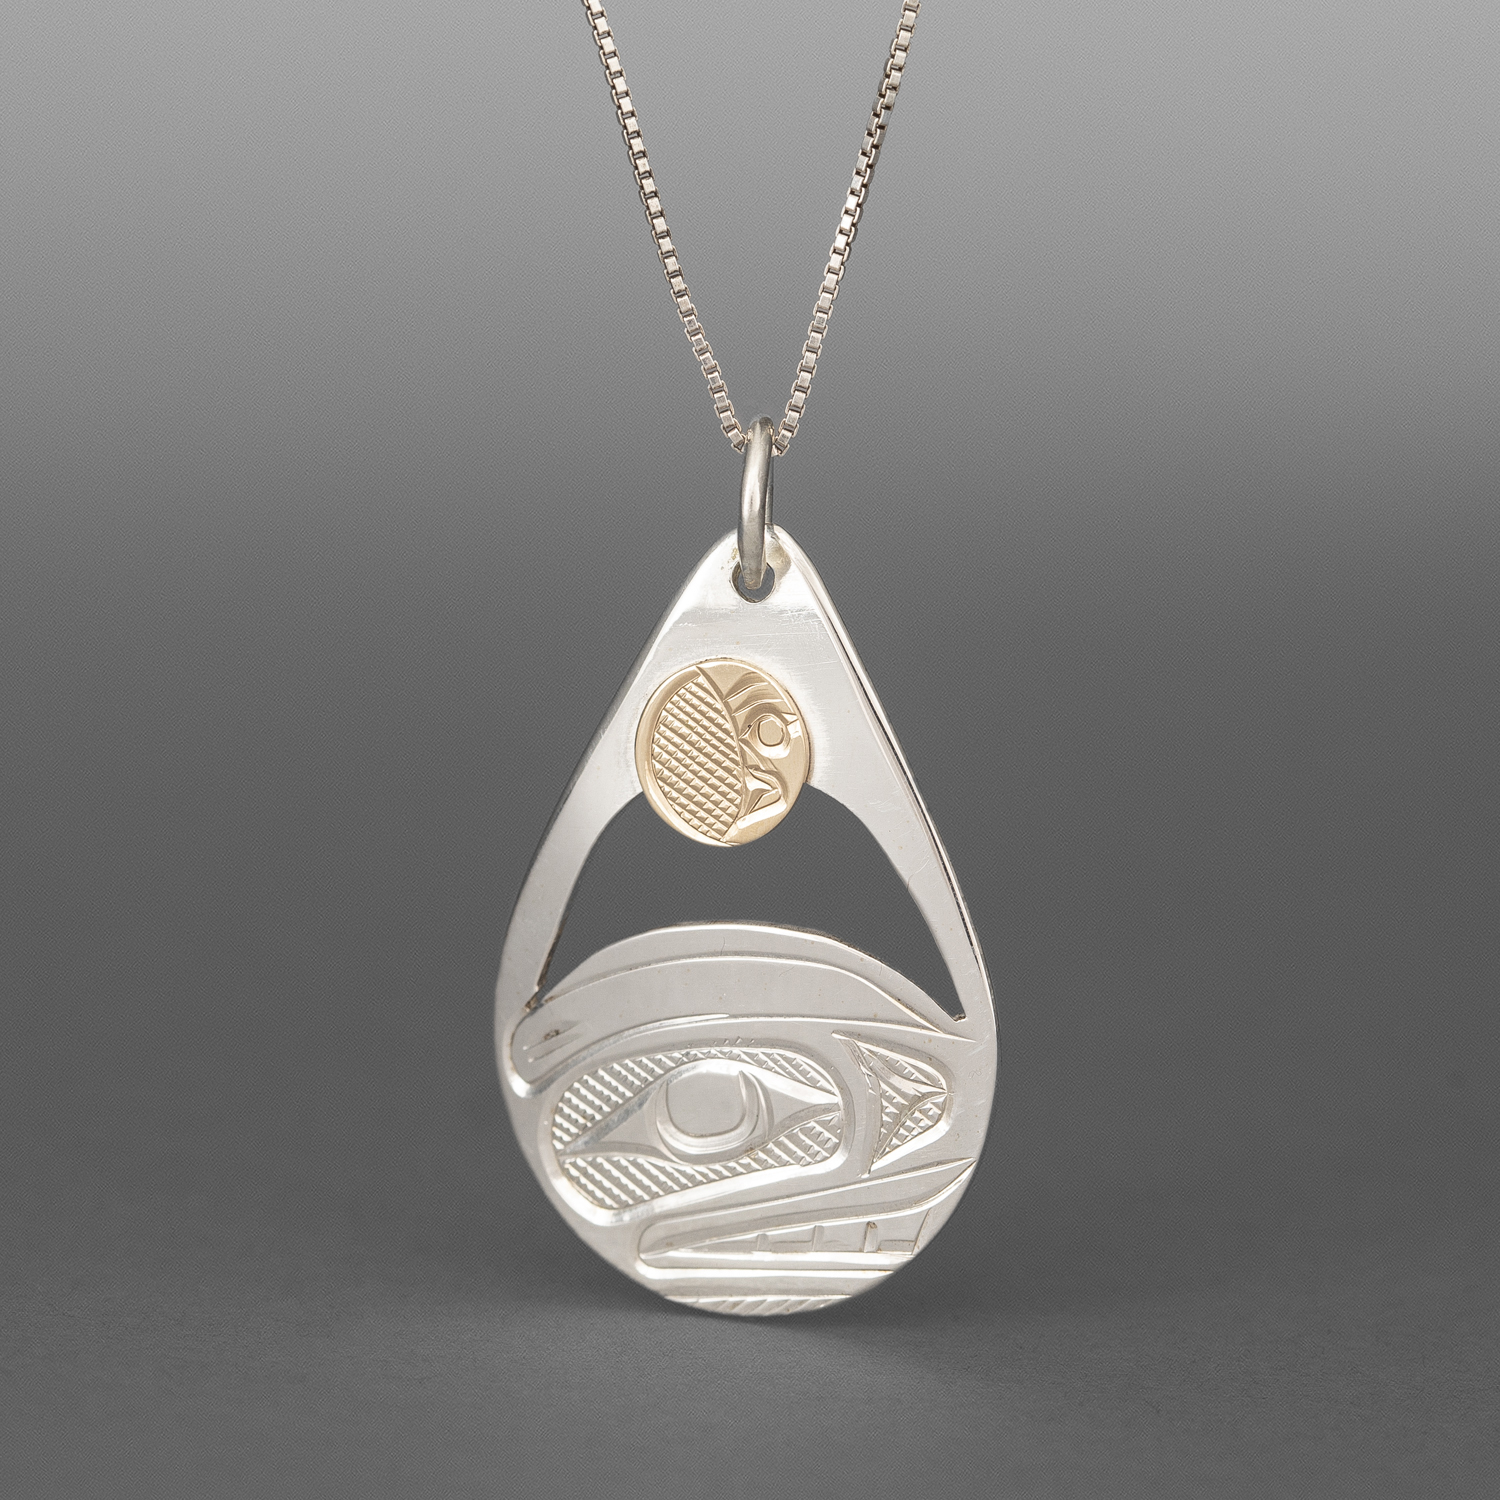 Orca & MoonPendant
Corrine Hunt
Kwakwaka'wakw/Tlingit
Sterling silver, 14k gold
1½” x 1"
$325